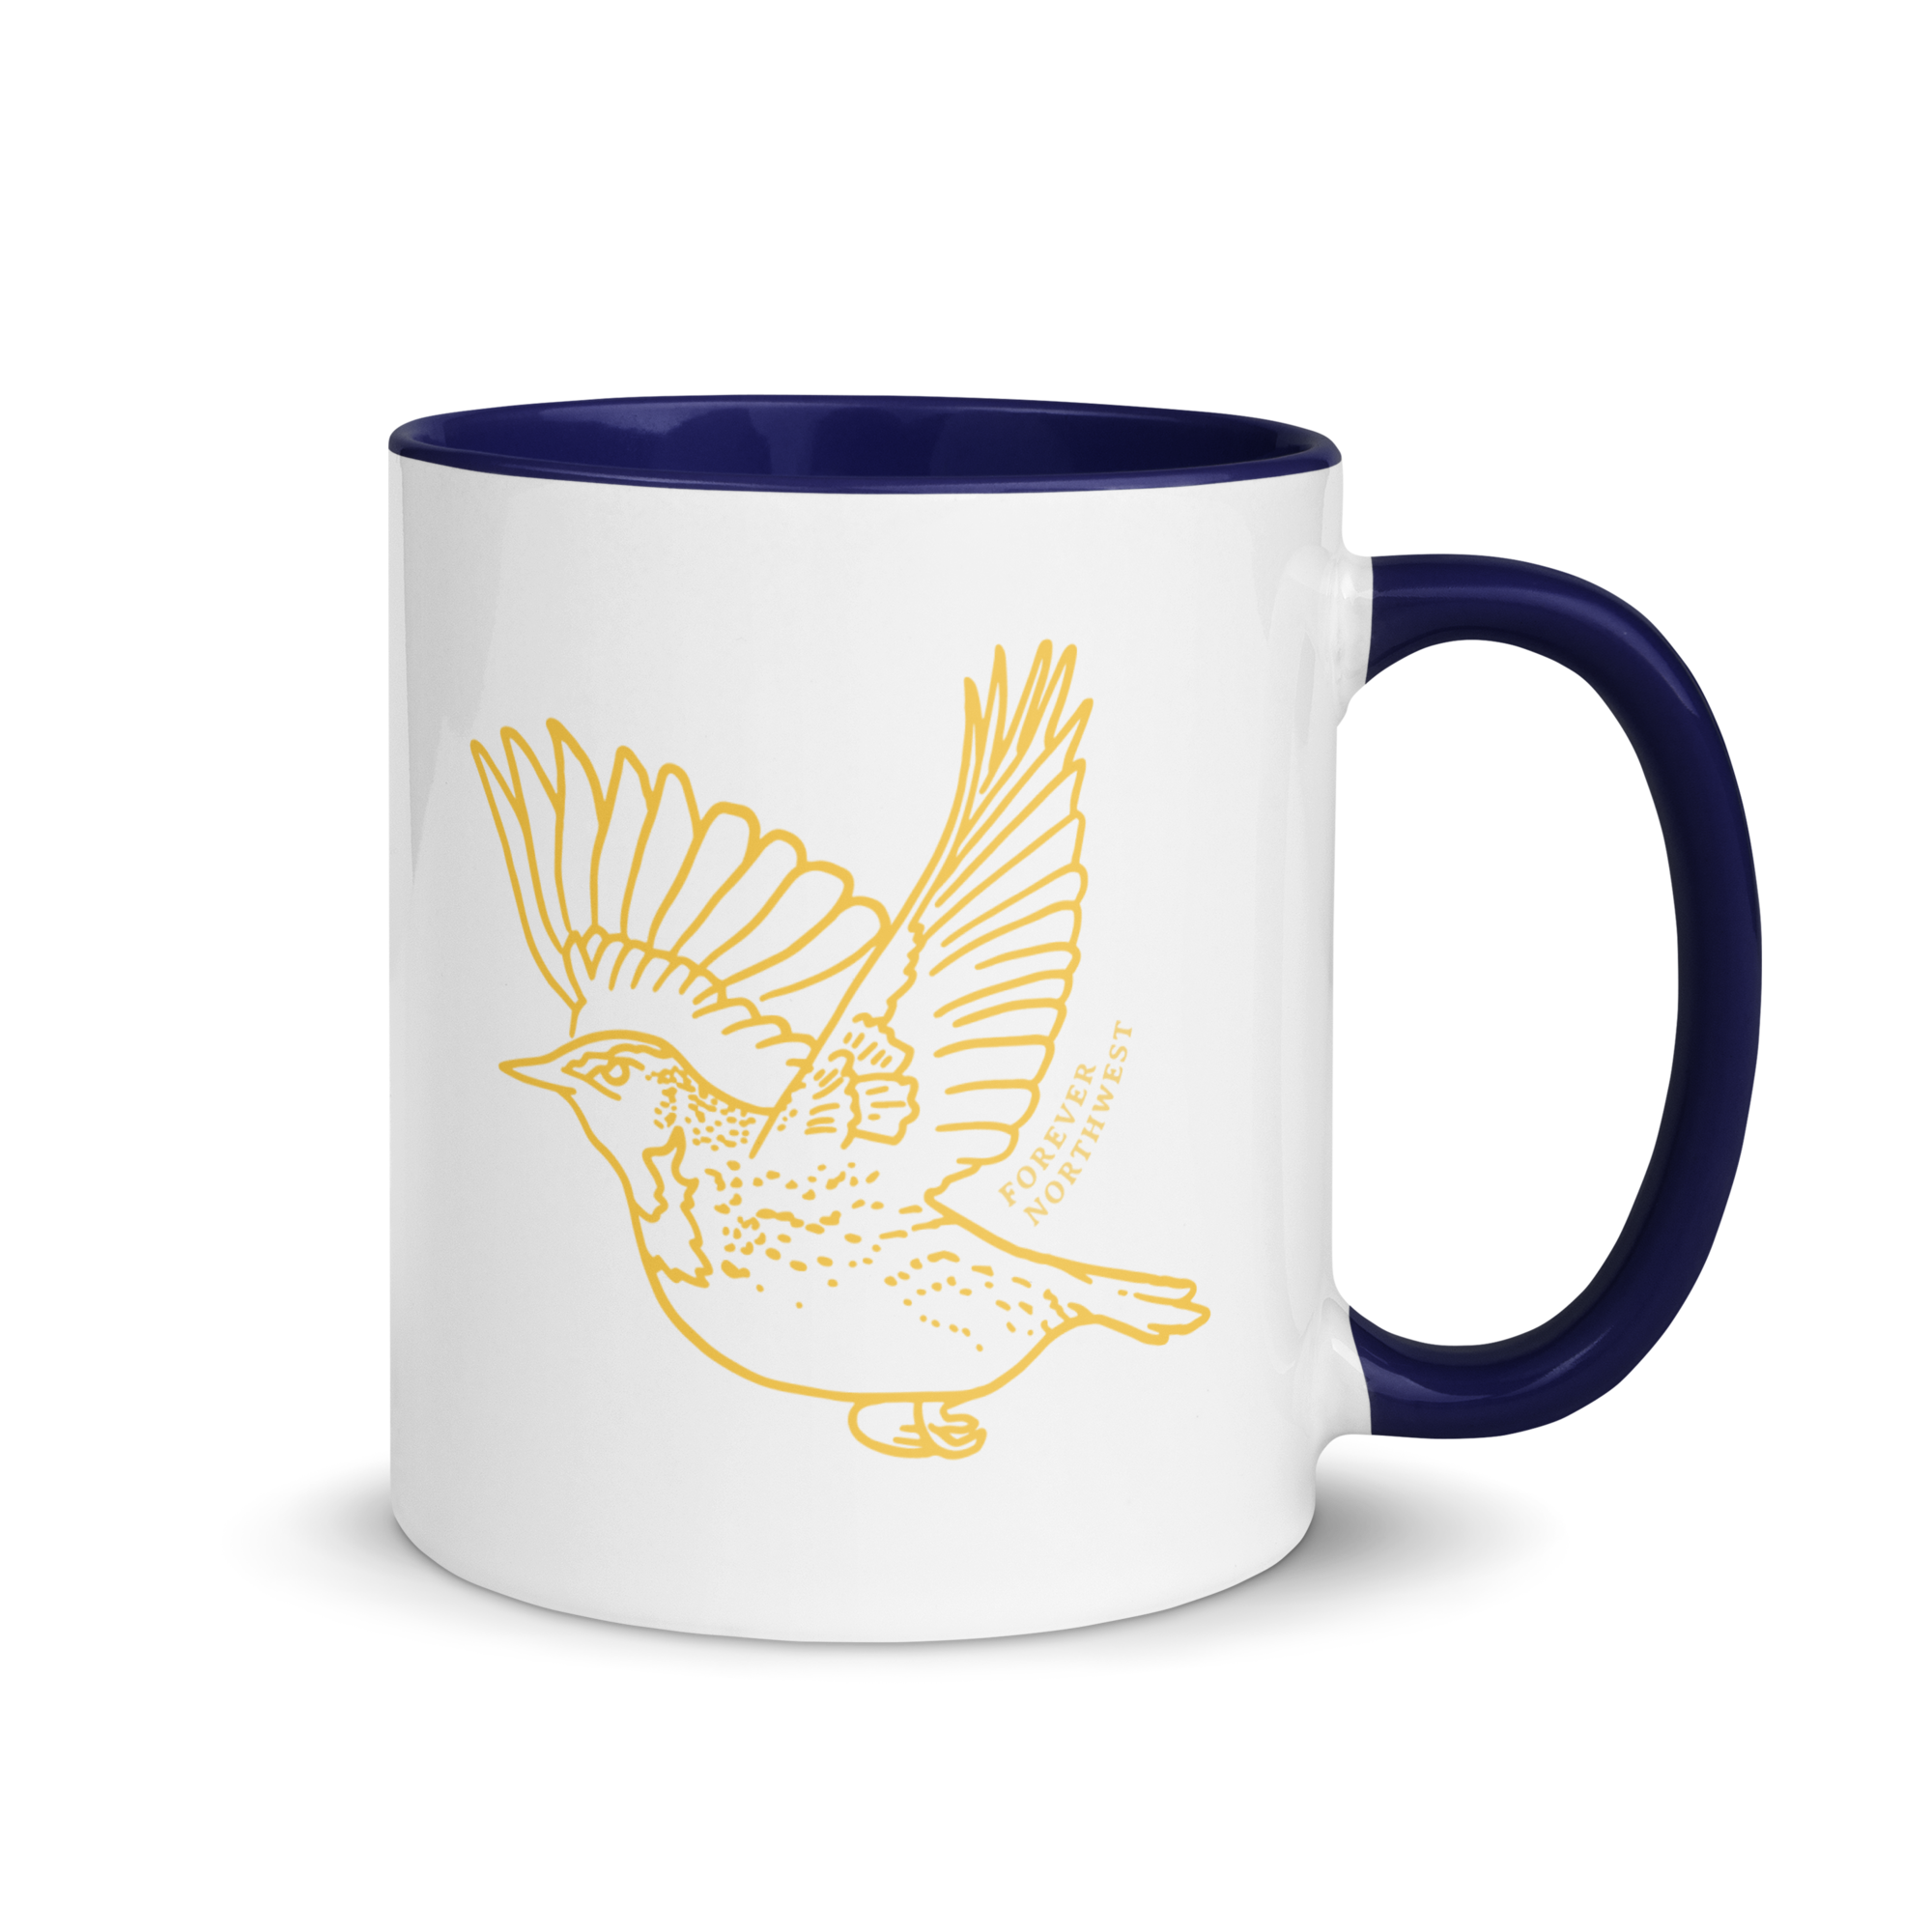 She Flies with Her Own Wings Coffee Mug